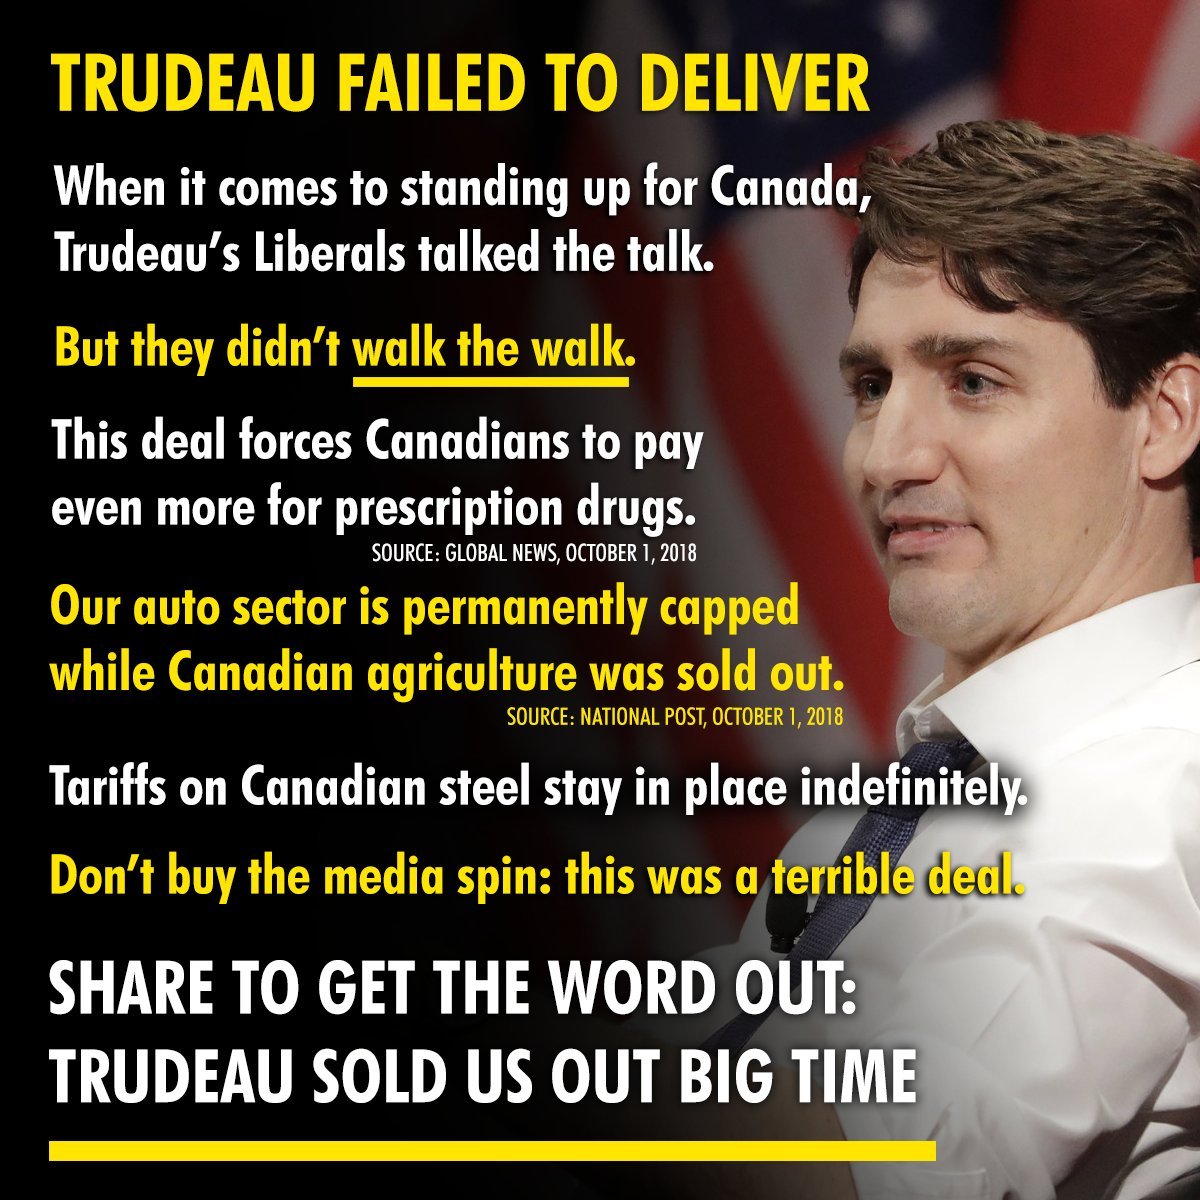 #justintruedoedough #TrudeauChineseElect #TrudeauMustResign #TrudeauForTreason #TrudeauBrokeCanada #TrudeauCorruption #LiberalCorruption #LiberalCommunism #TrudeauDictatorship #TrudeauHatesWomen #TrudeaMustGo #CorruptedLiberals #LittlePotatoChineseAsset #POEC #TrudeauTheFreak